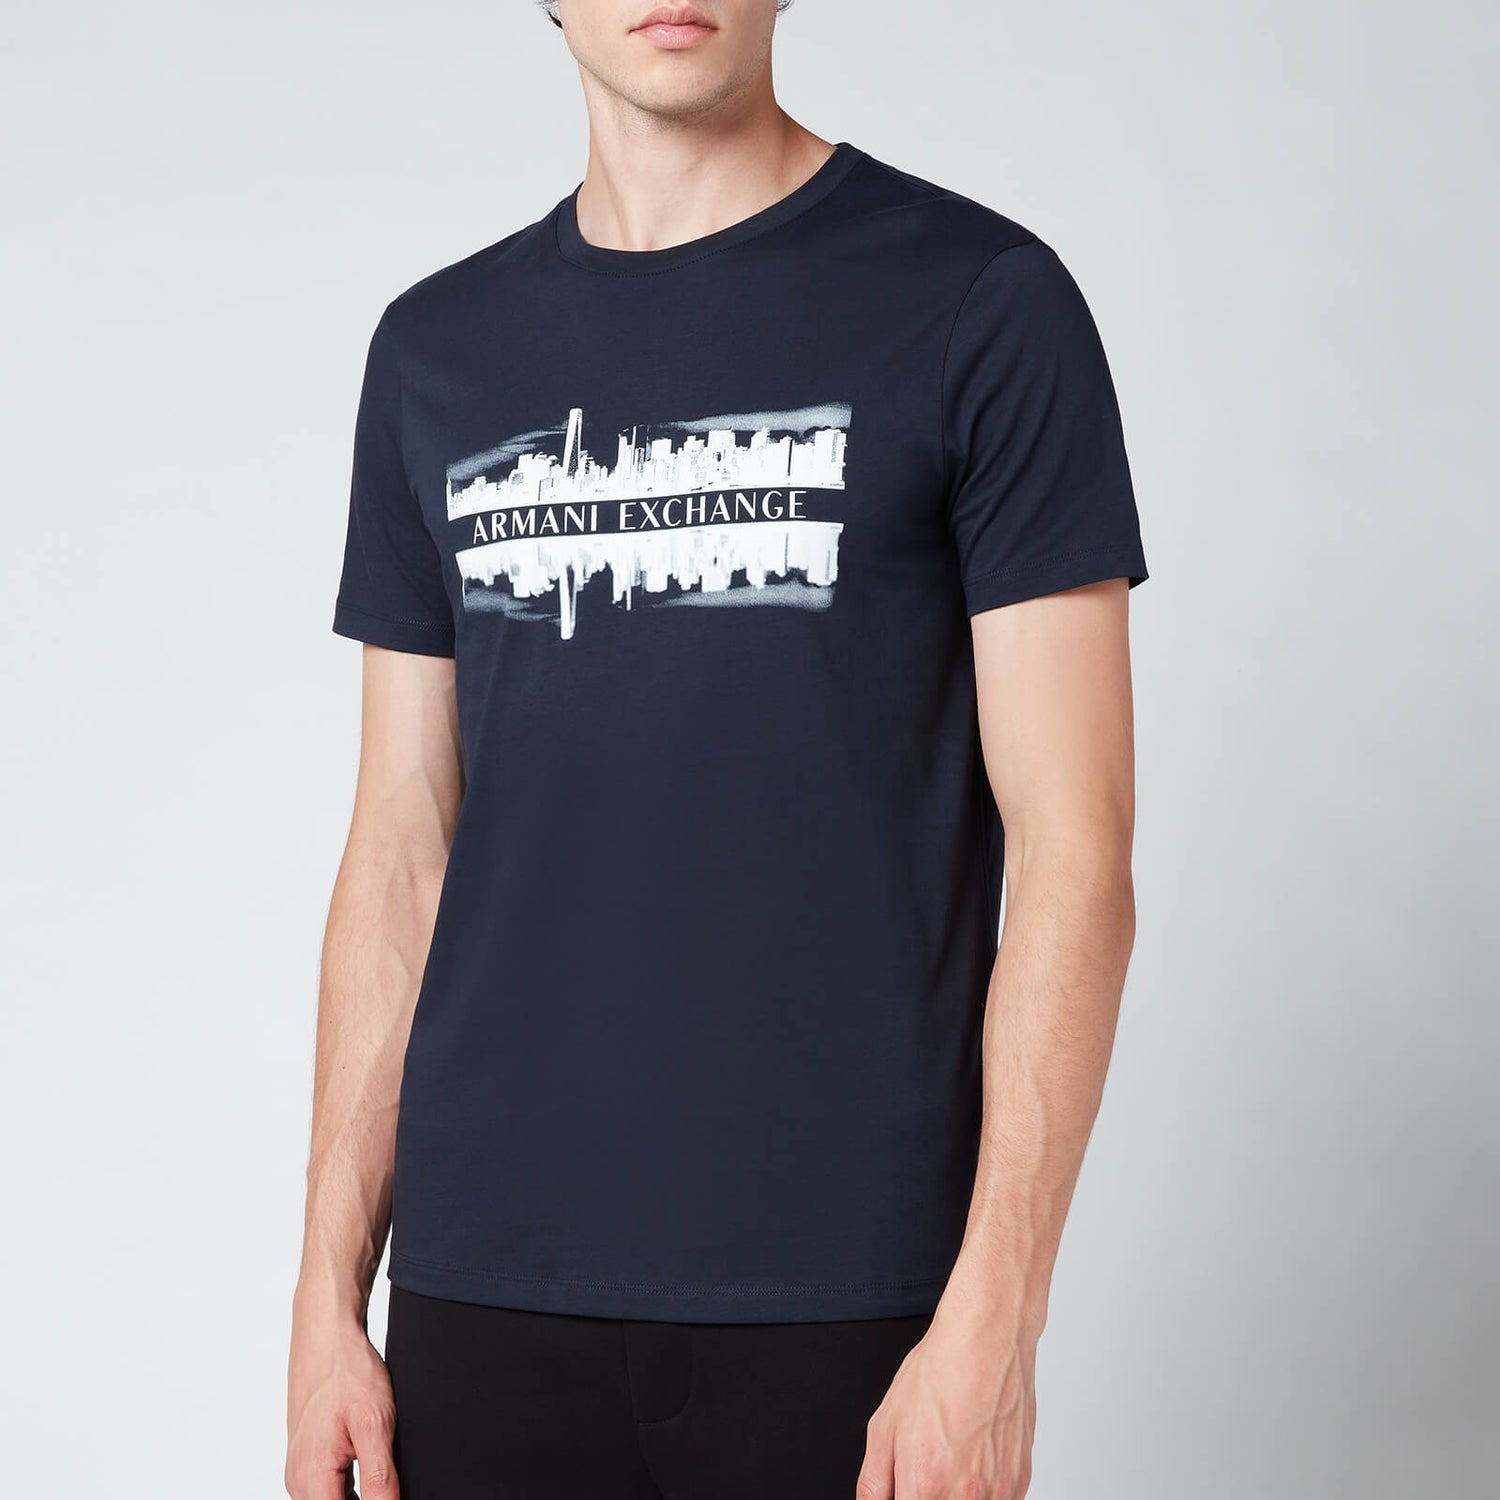 Armani Exchange Men's Graphic T-Shirt - Navy